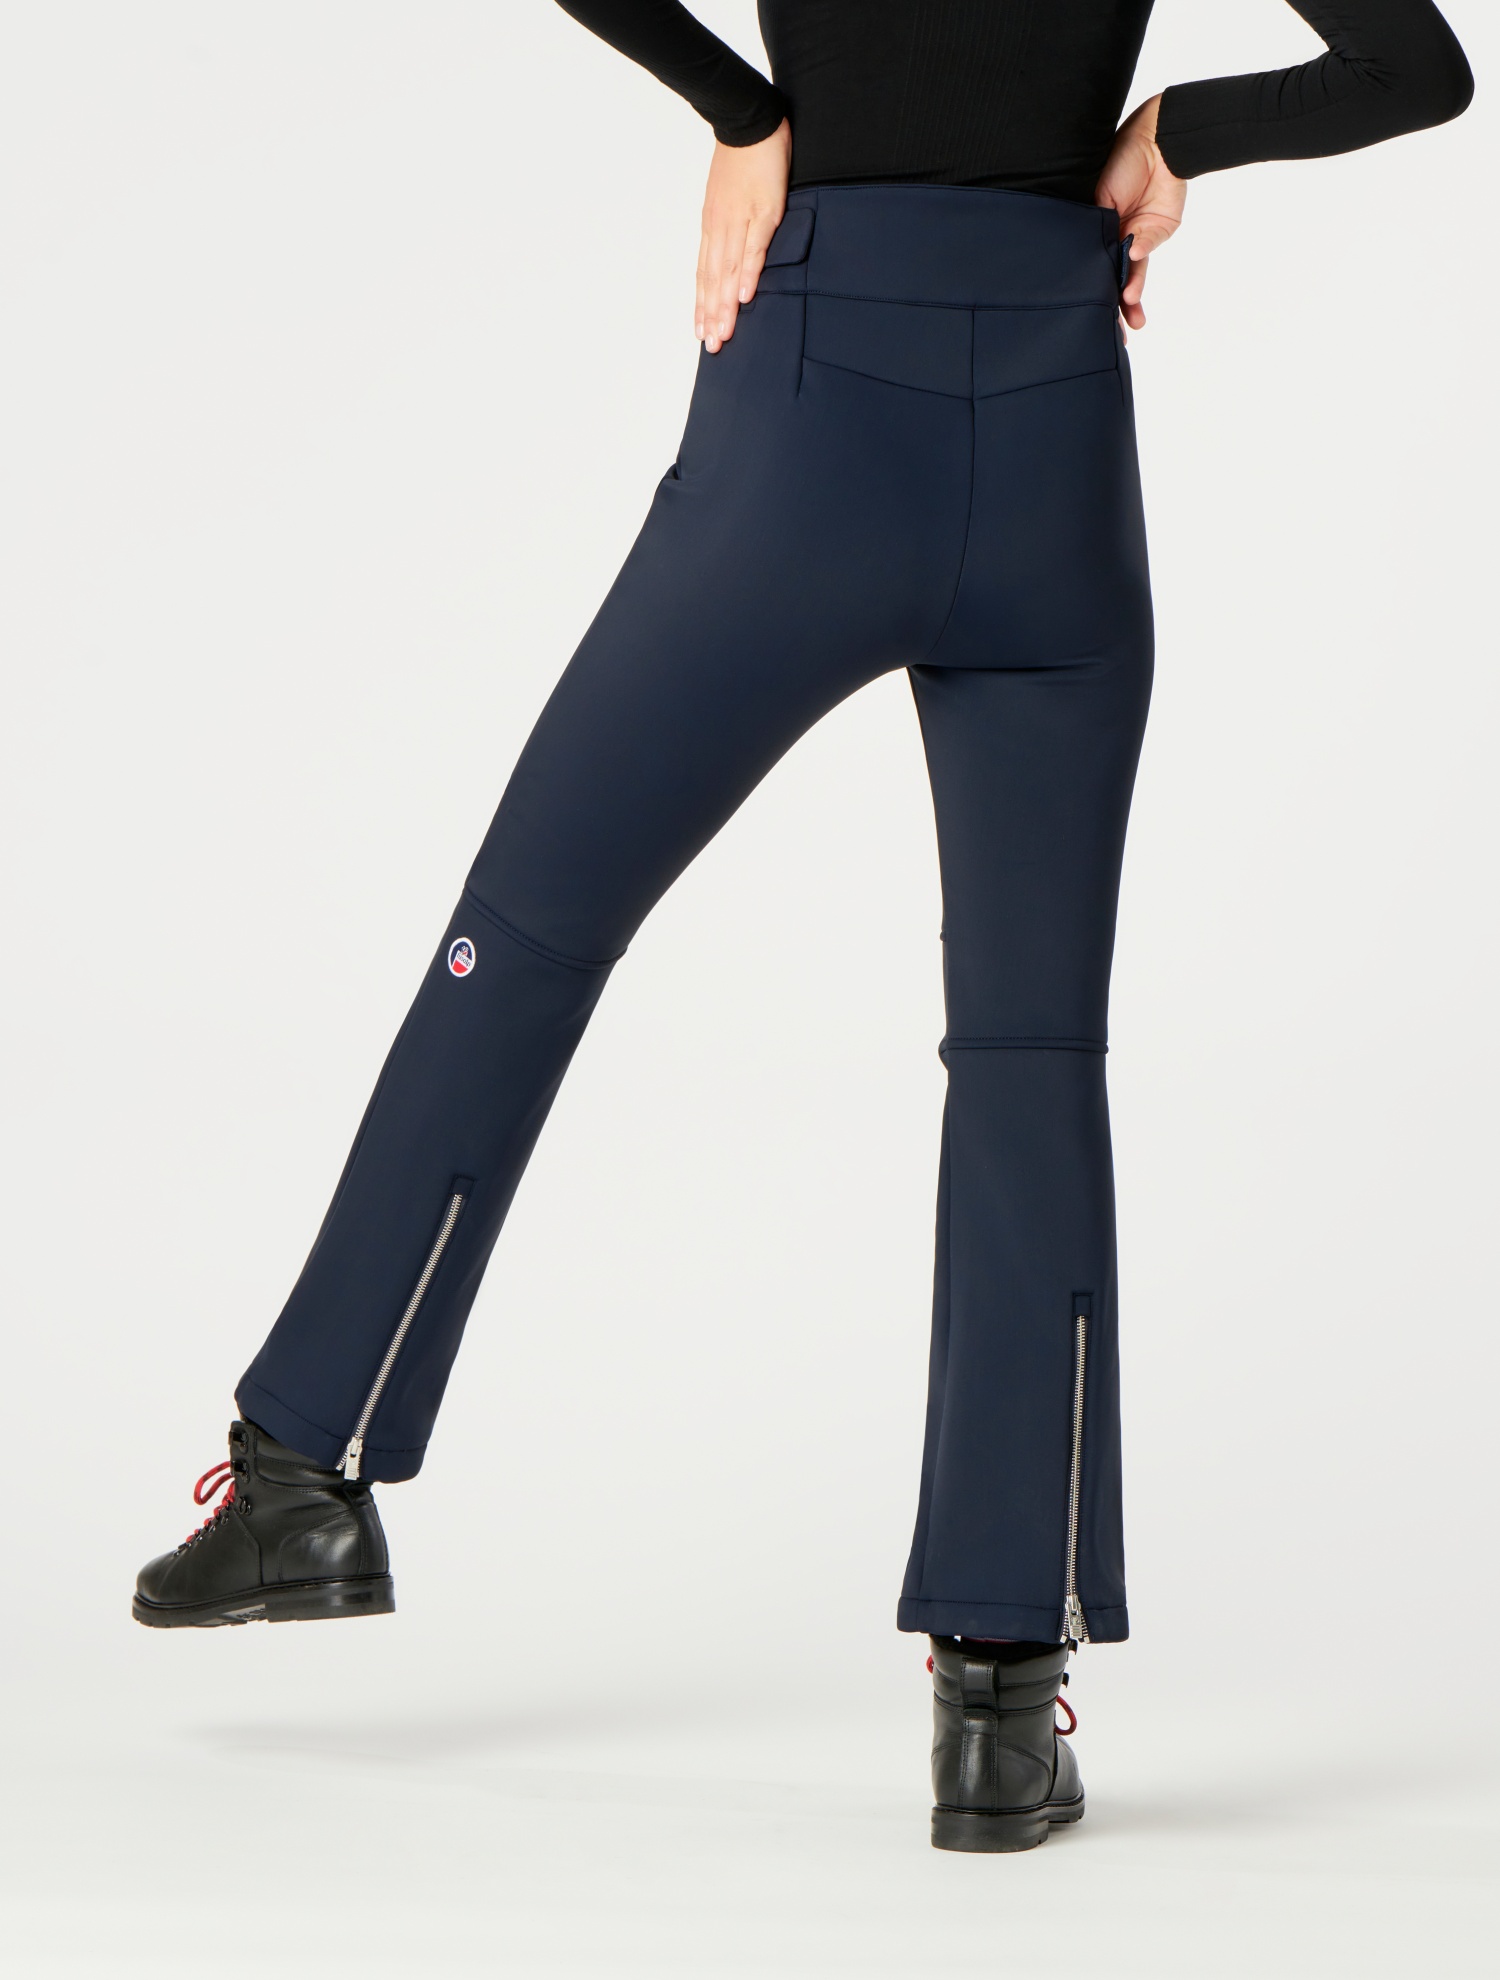 Elancia II fuseau: Women's skinny-fit ski pants in Softshell